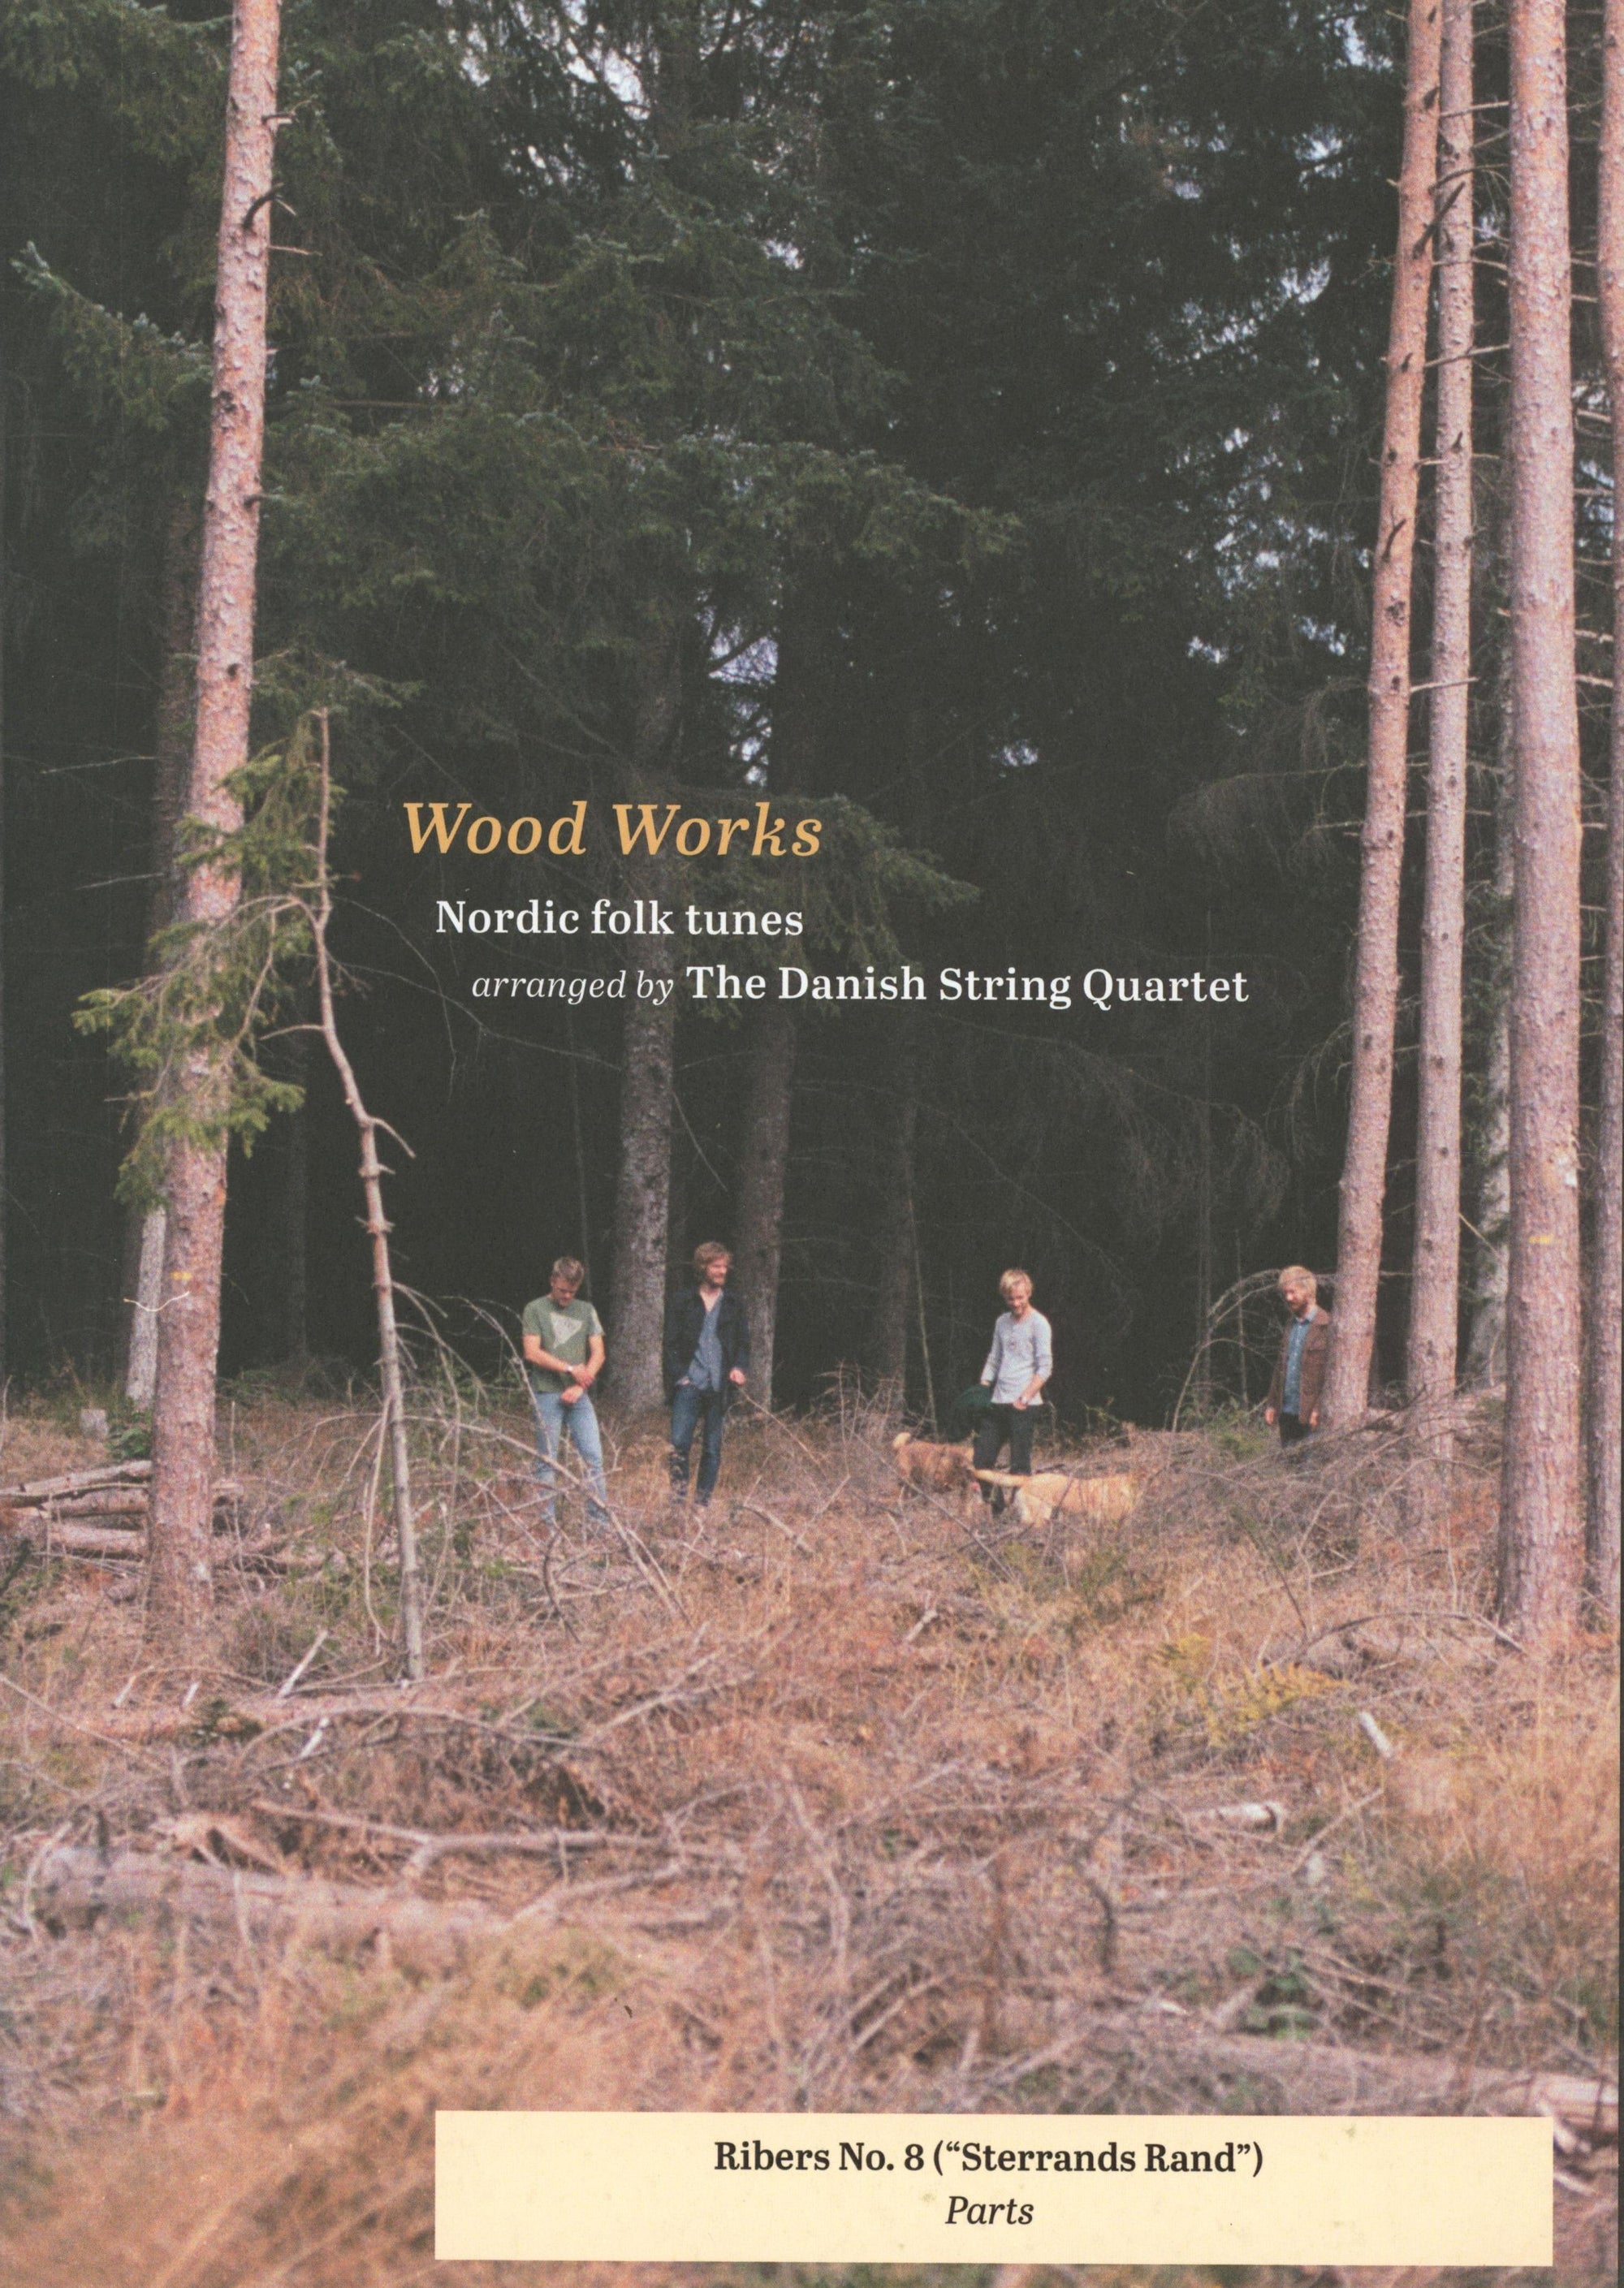 Wood Works – Ribers No. 8 ("Sterrands Rand")